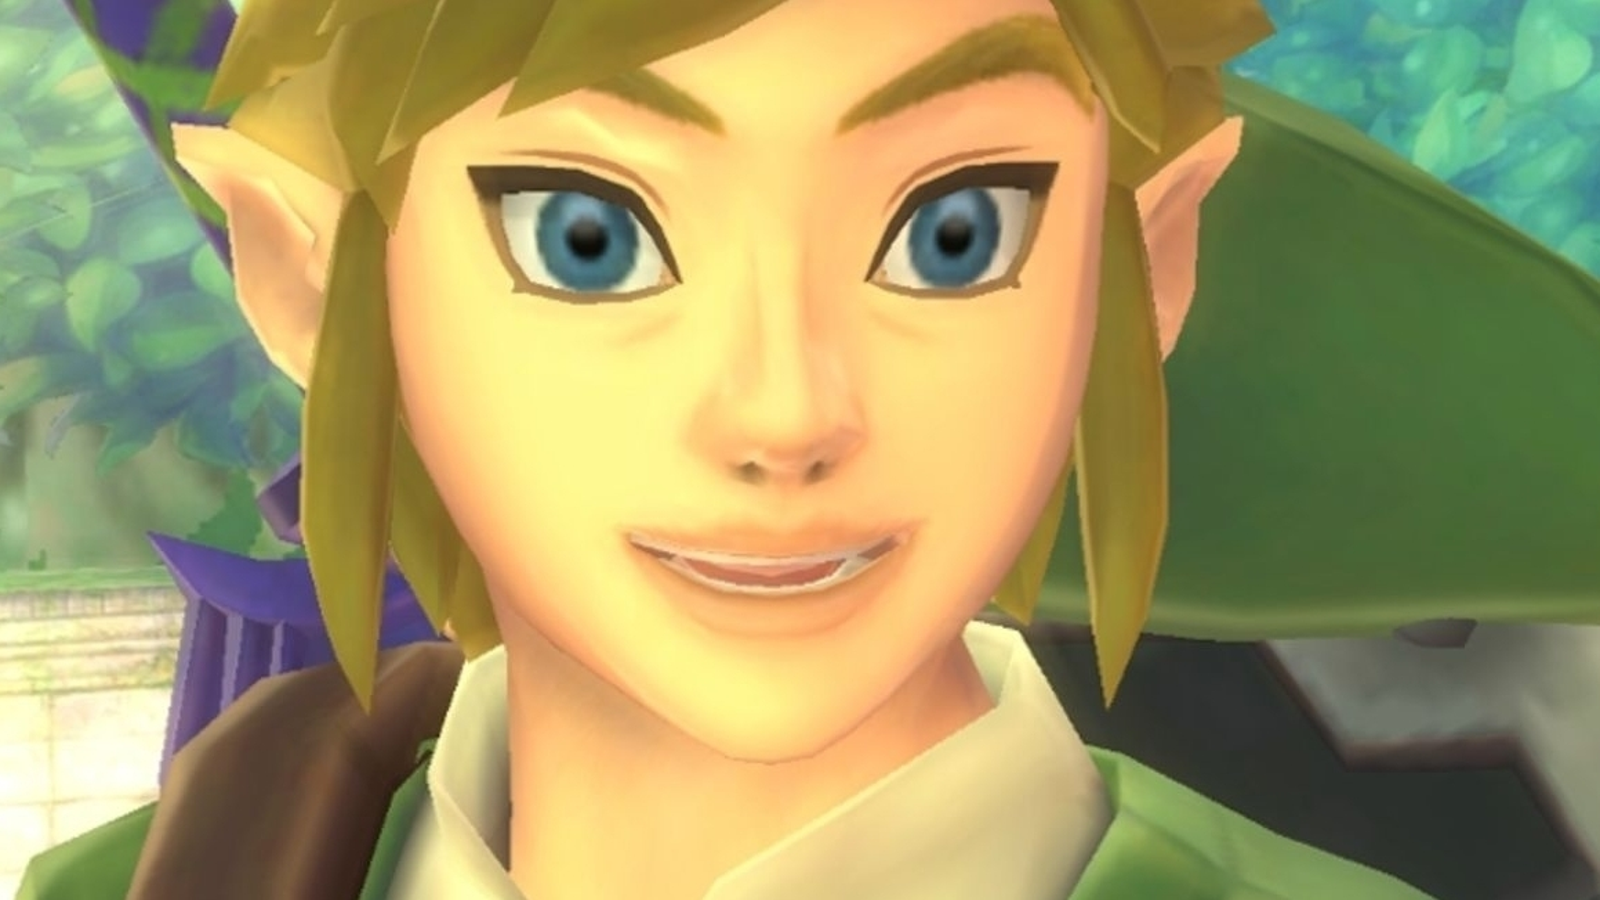 Nintendo Switch the Legend of Zelda Skyward Sword Themed 